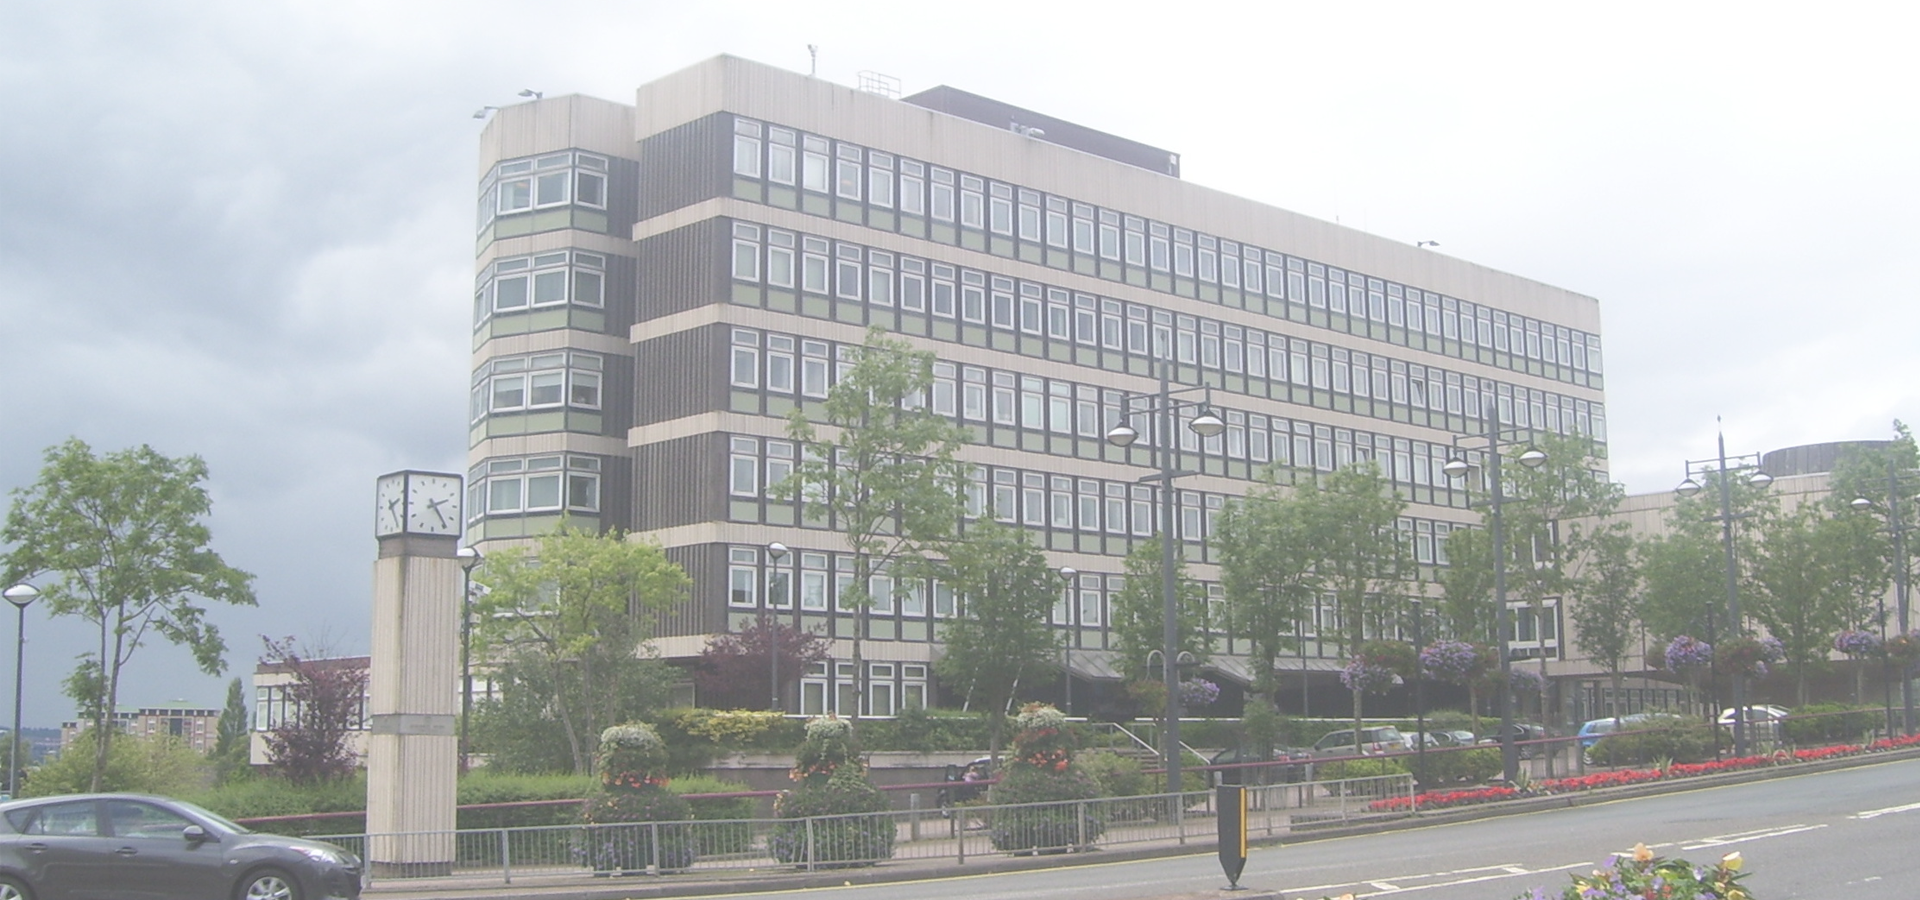 Motherwell Civic Centre, North Lanarkshire